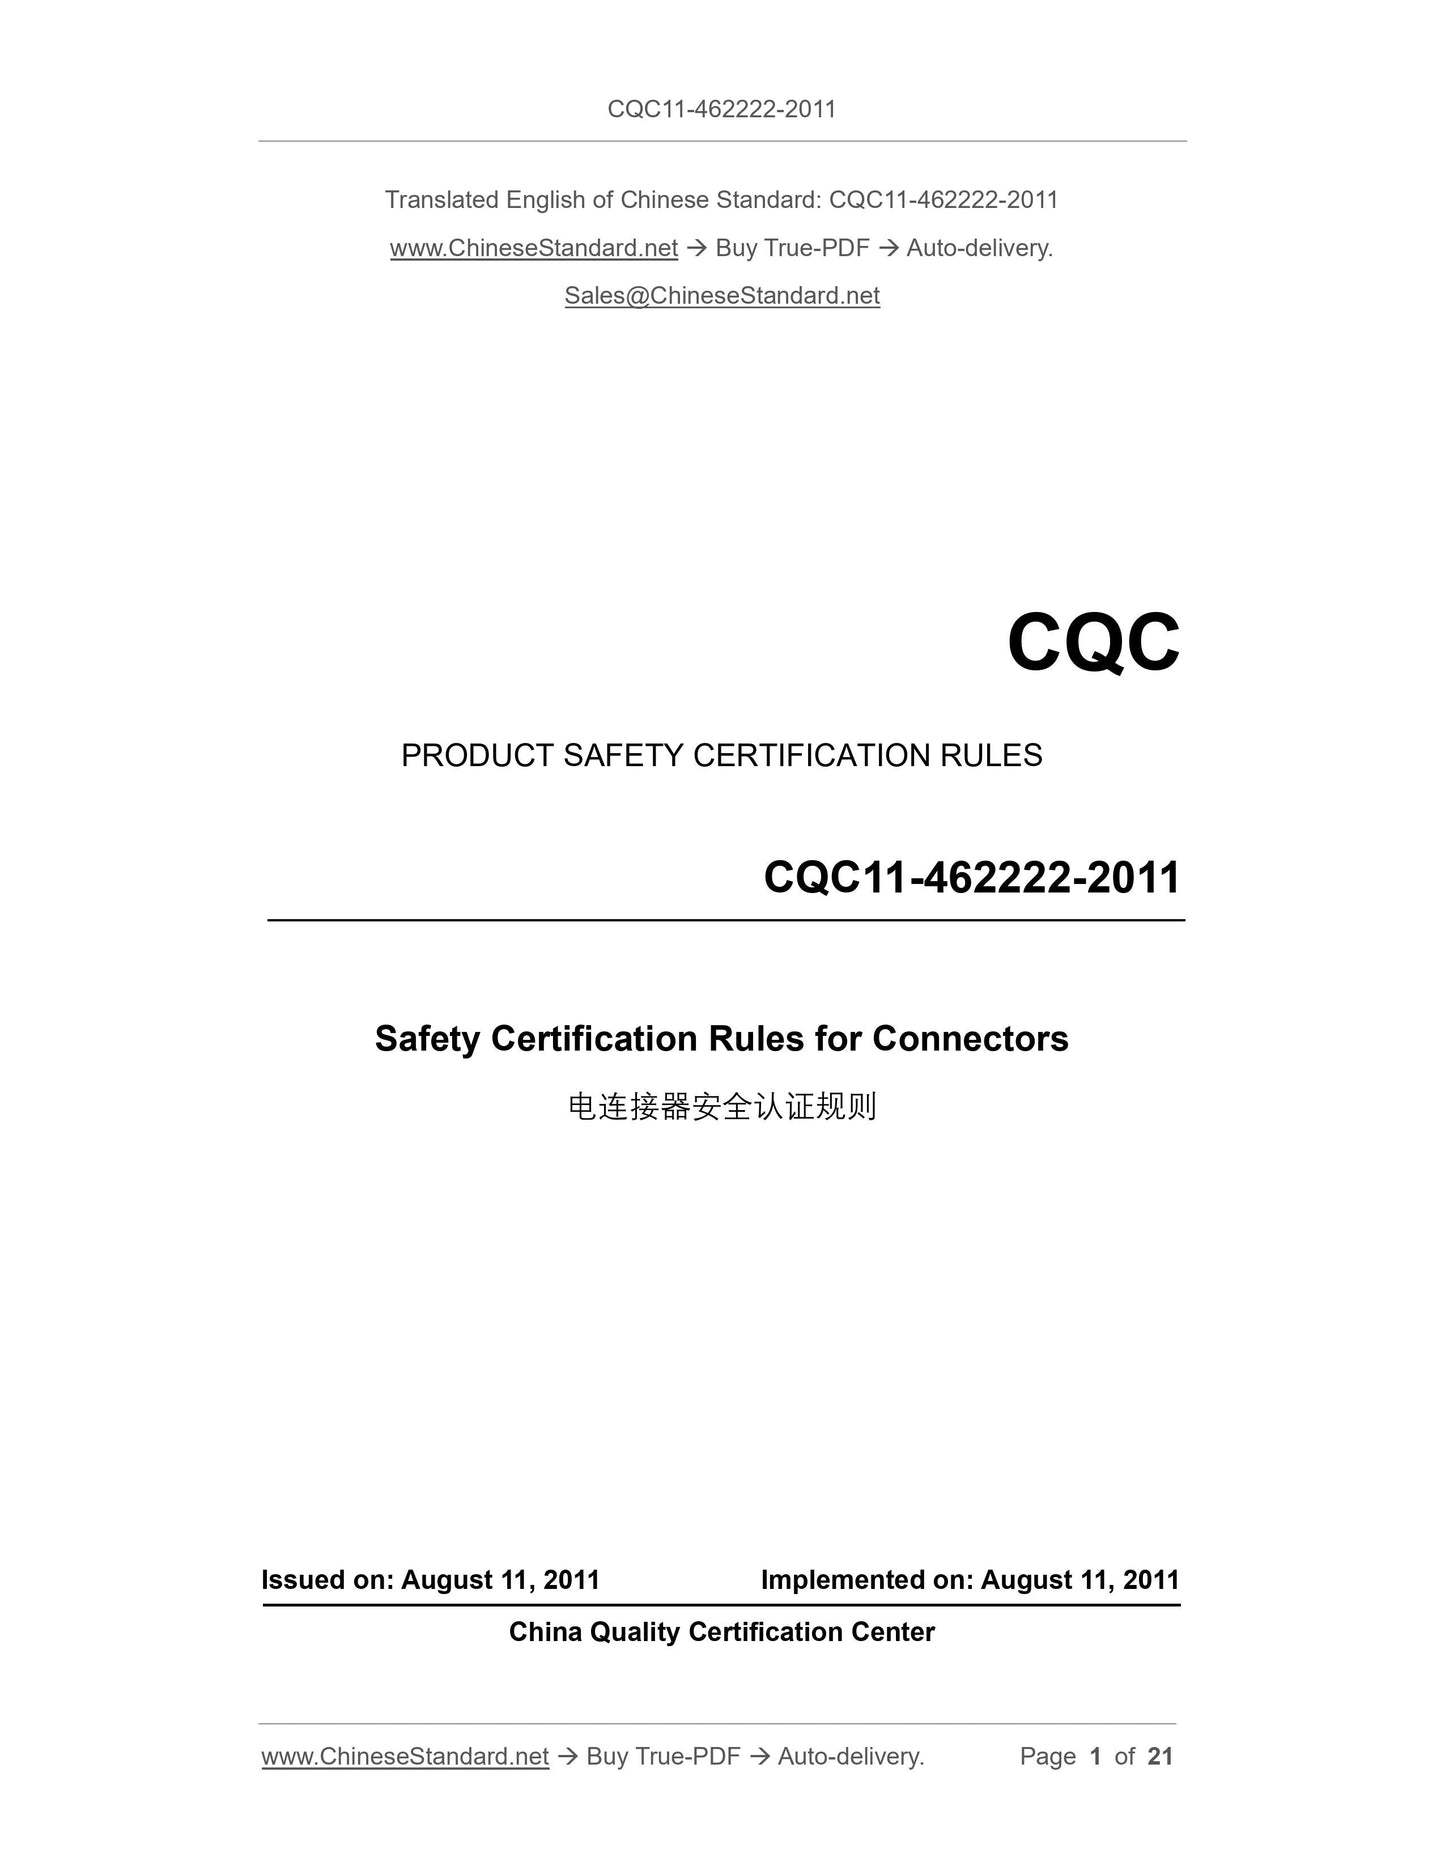 CQC11-462222-2011 Page 1